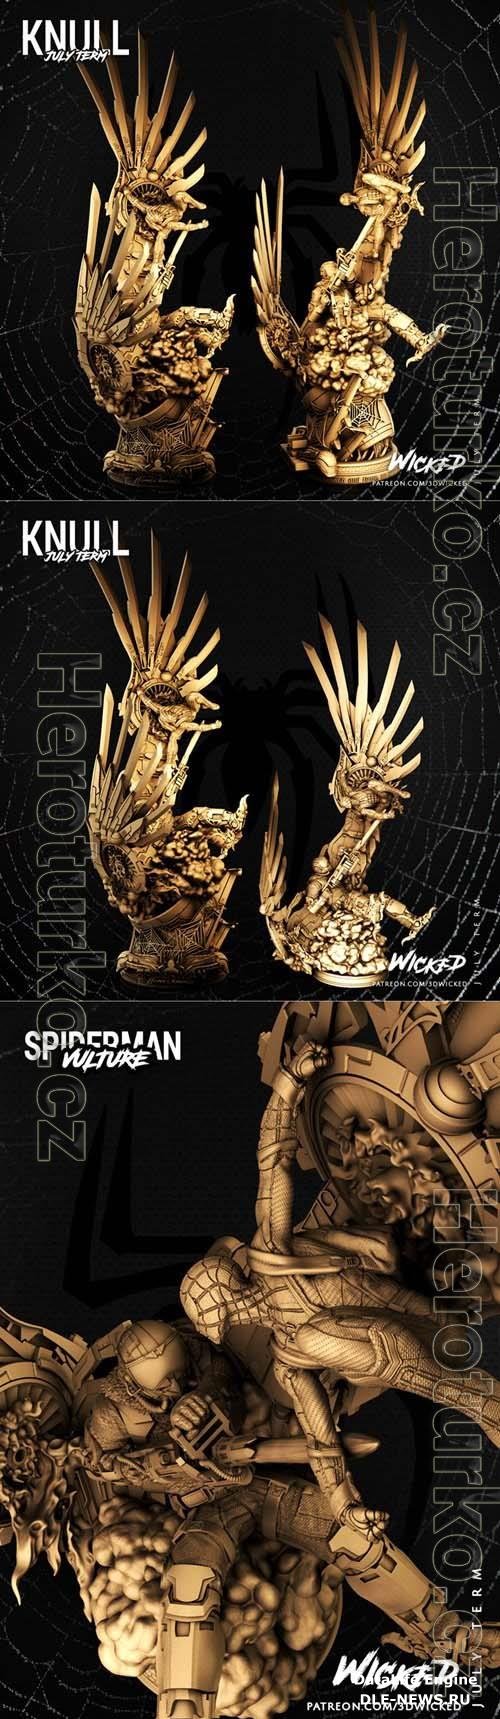 Wicked - Vulture vs Spiderman Diorama 3D Print